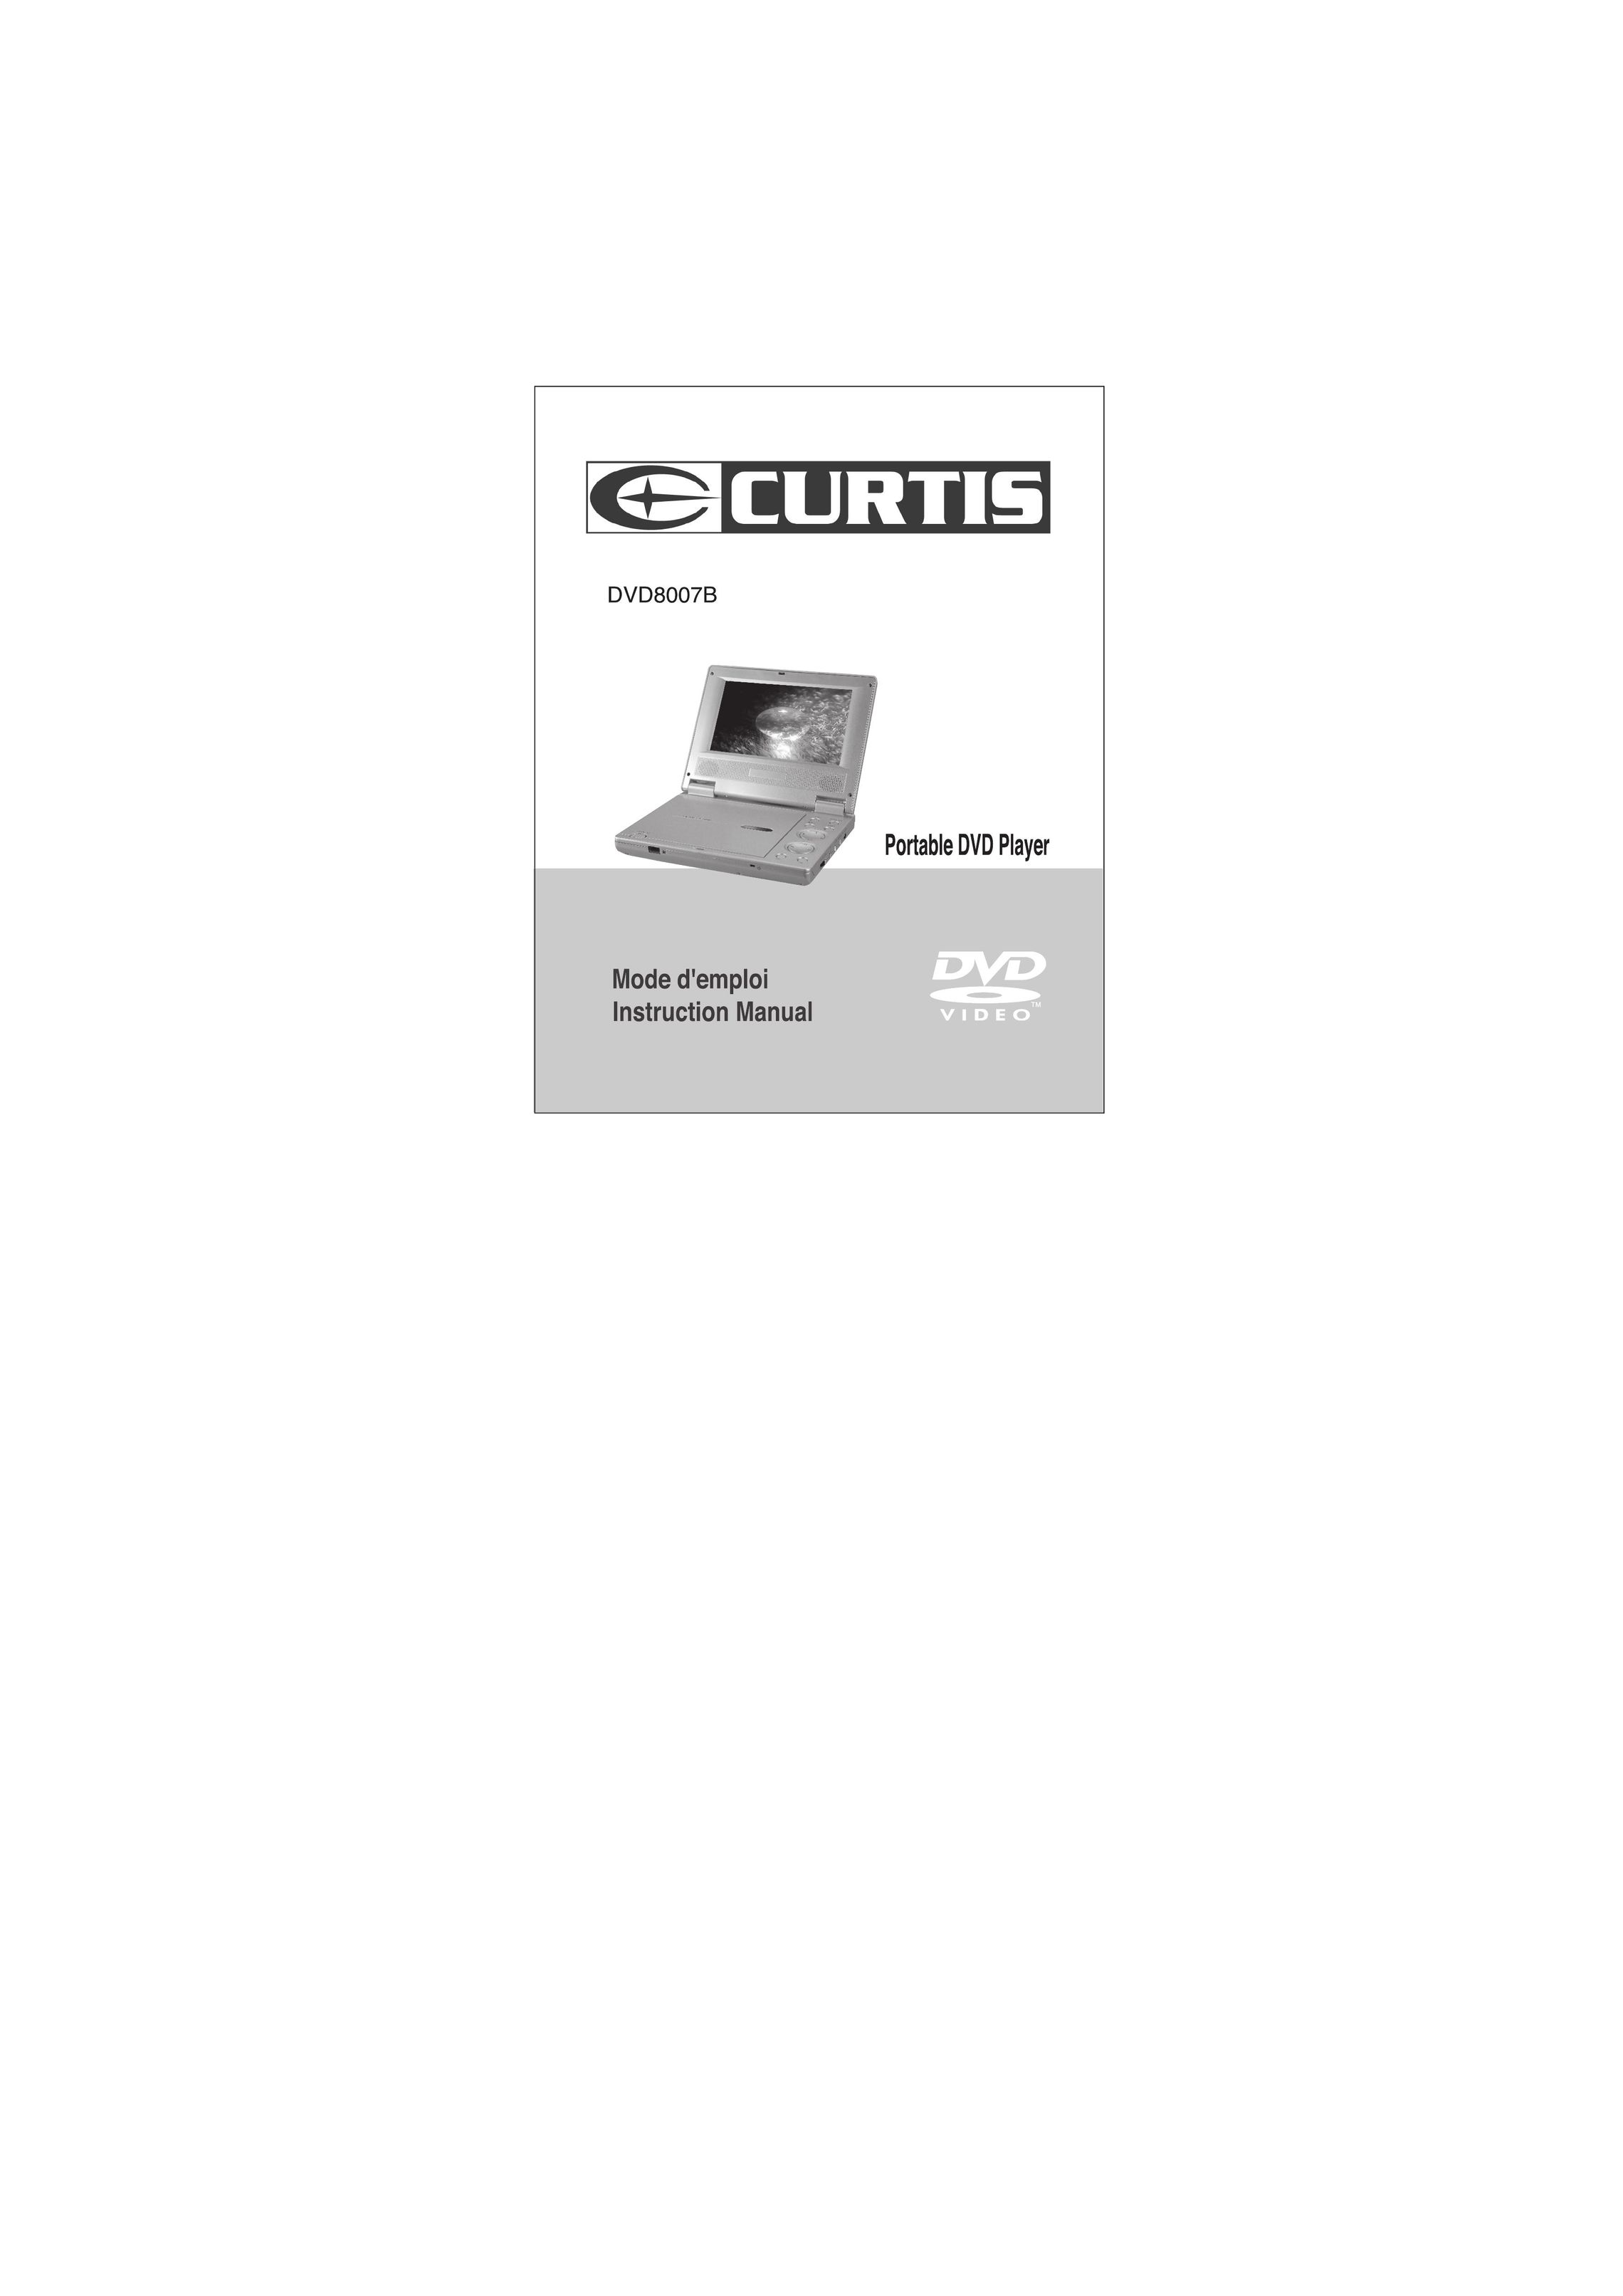 Curtis Dvd8007b Portable DVD Player User Manual